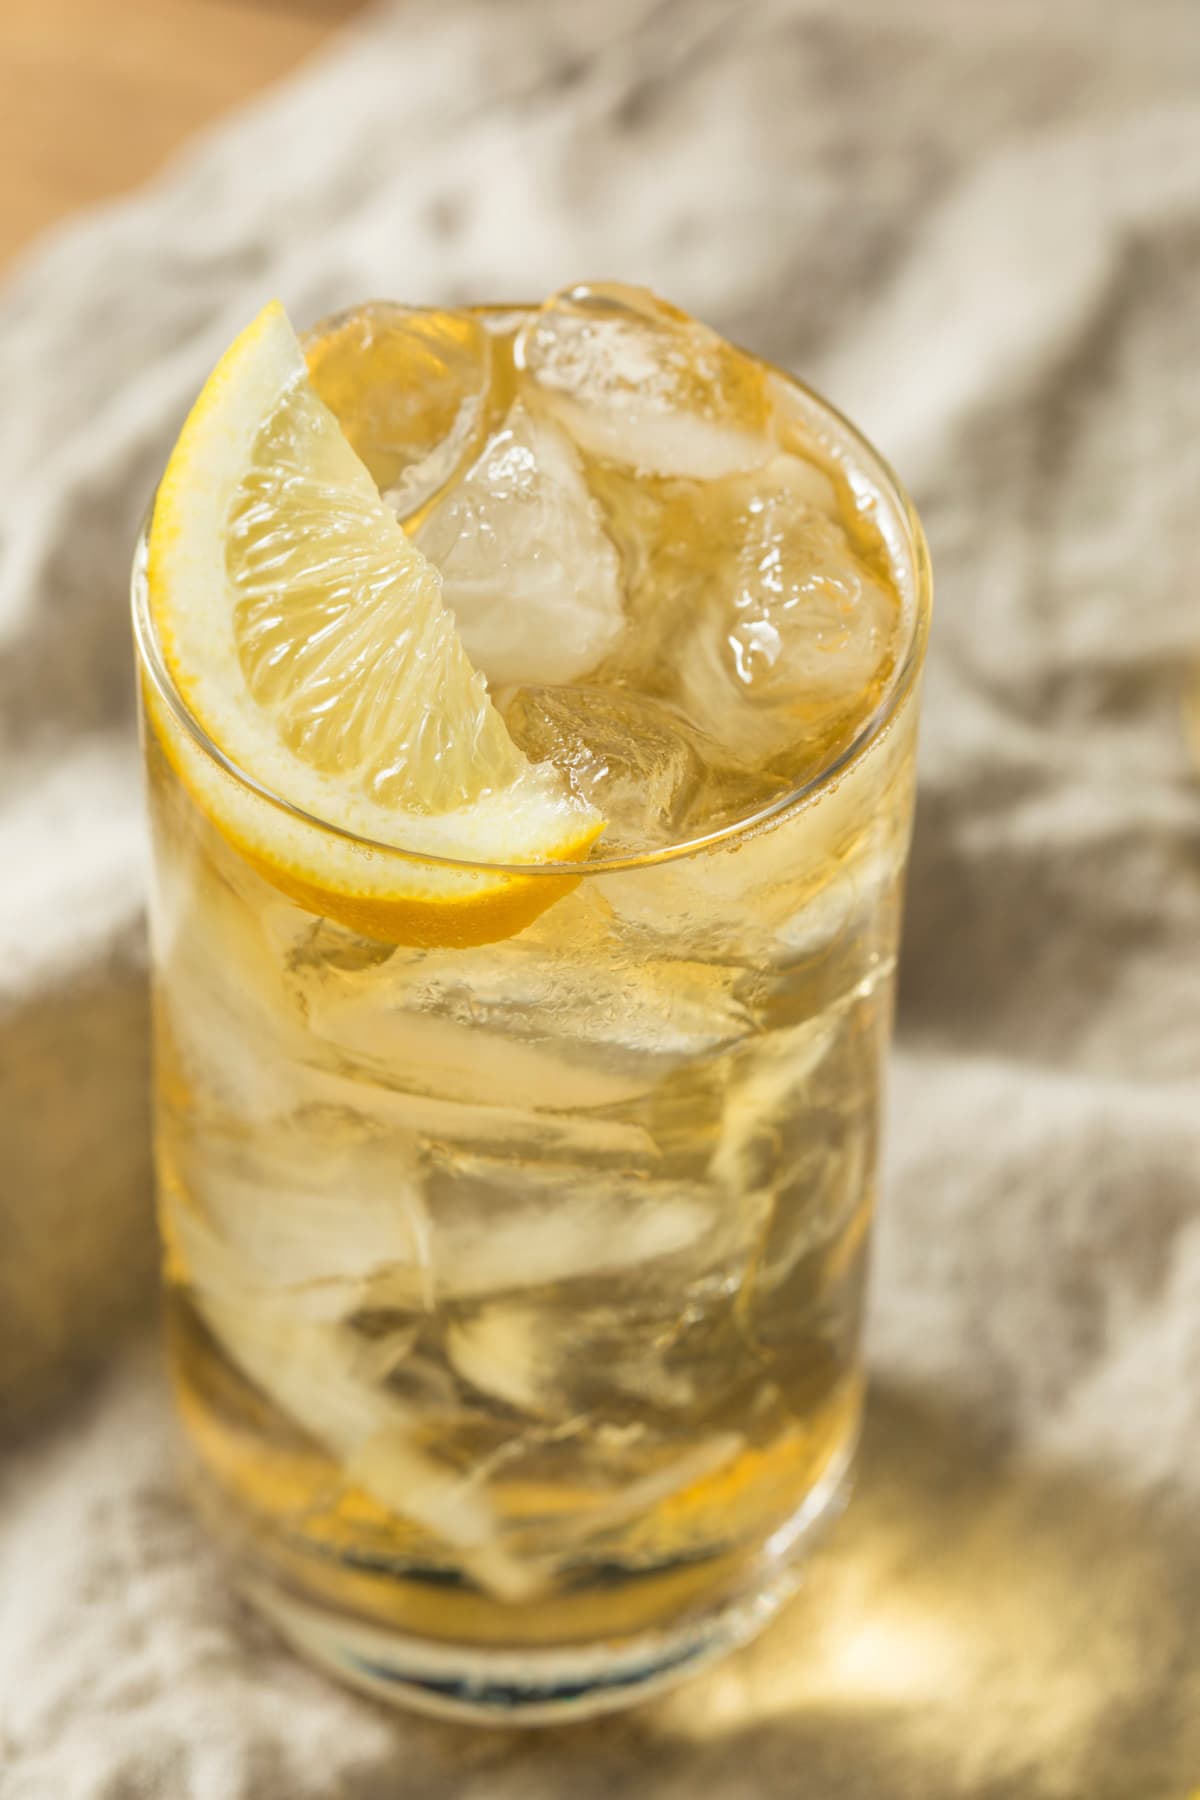 Ice filled highball glass of Lynchburg Lemonade with lemon slices. 